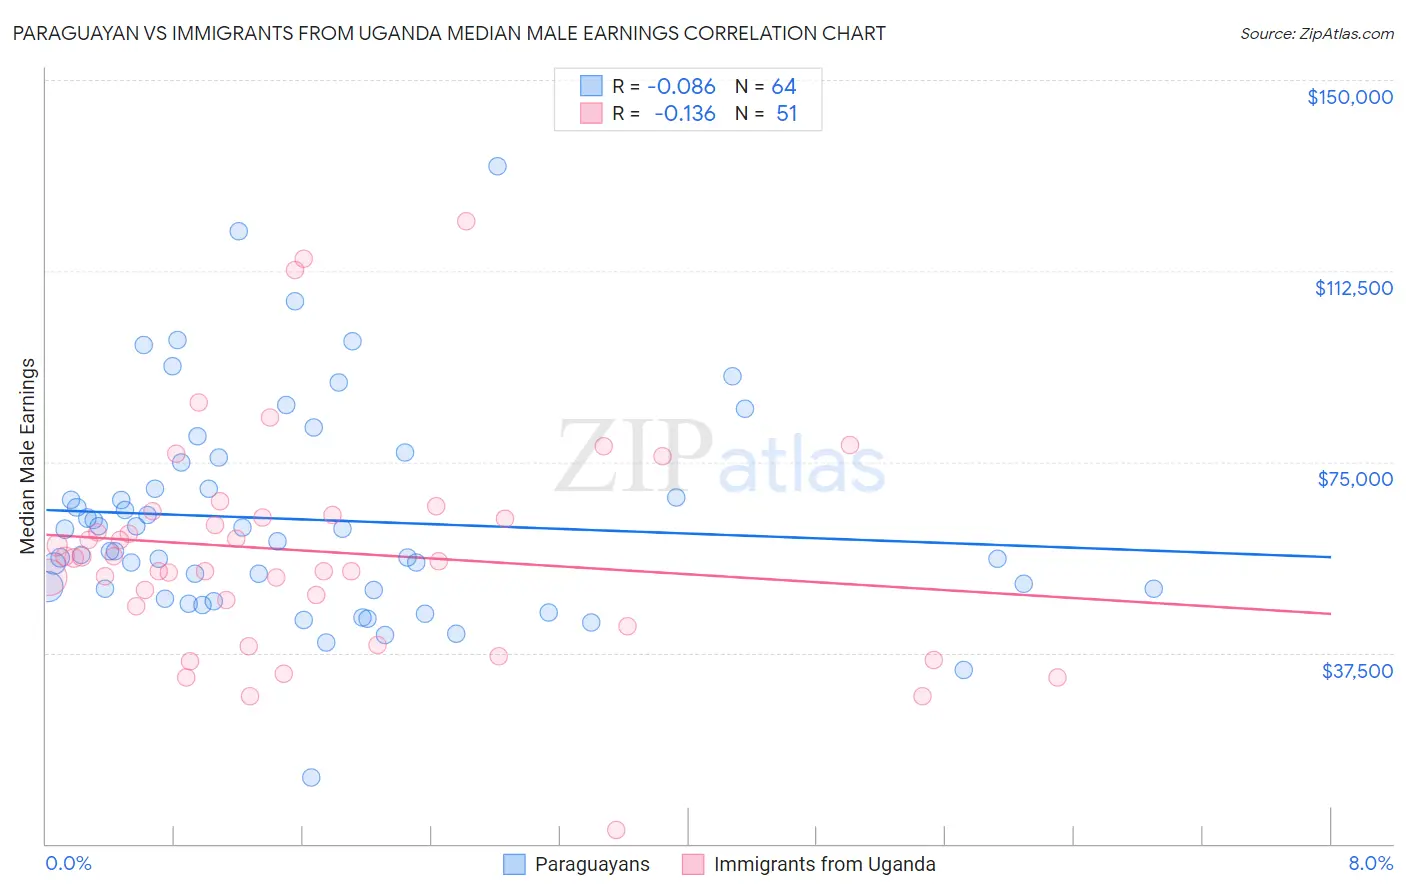 Paraguayan vs Immigrants from Uganda Median Male Earnings